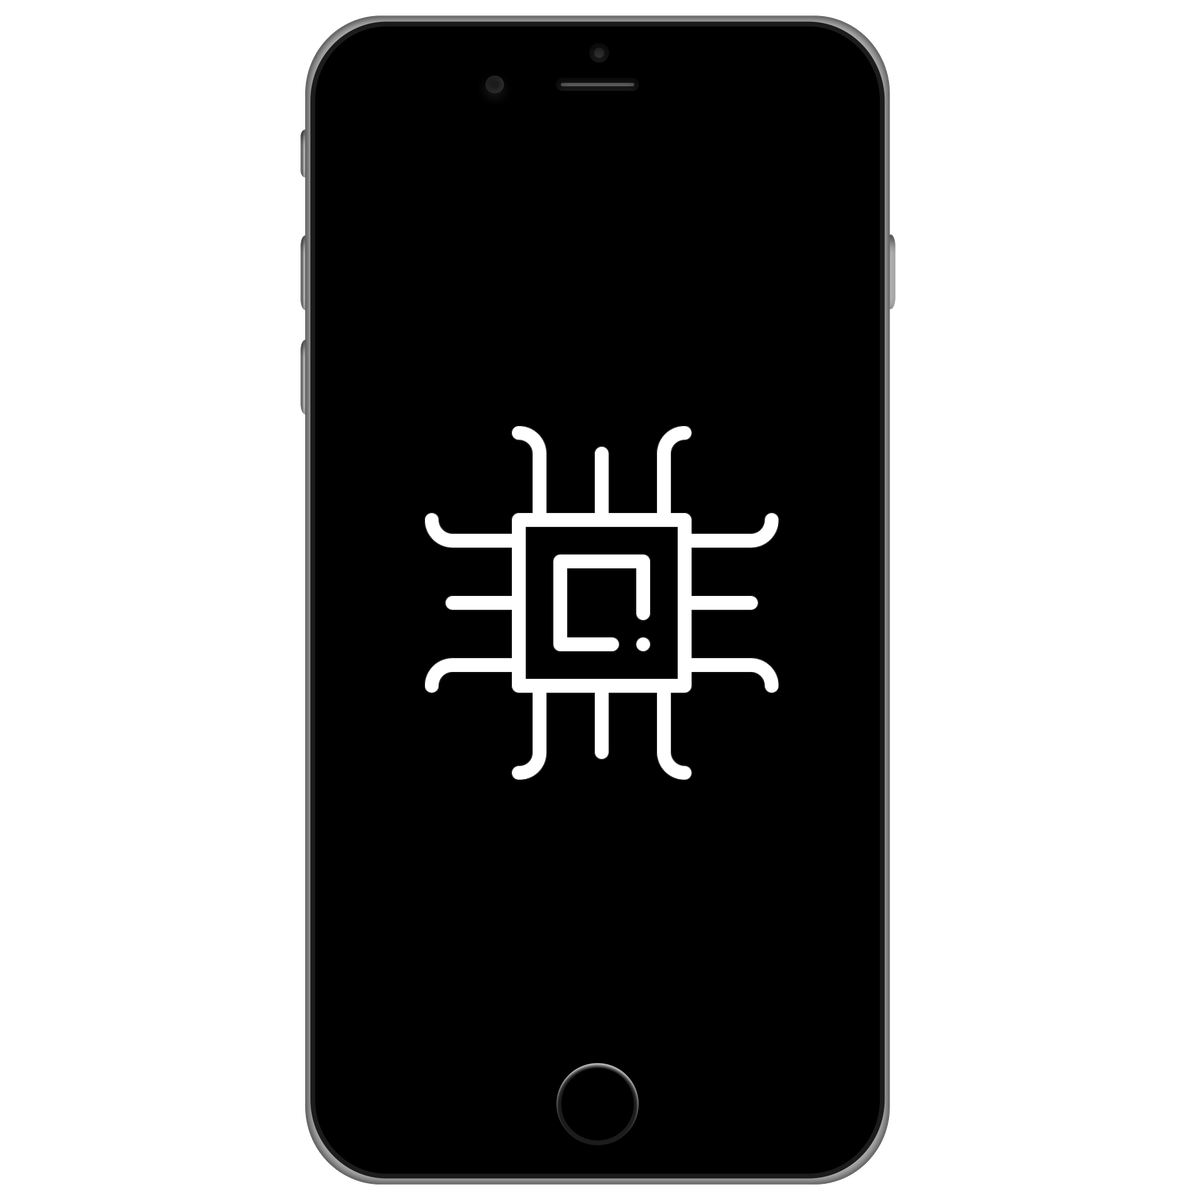 iPhone 11 Pro Max Motherboard Repair - TechPros